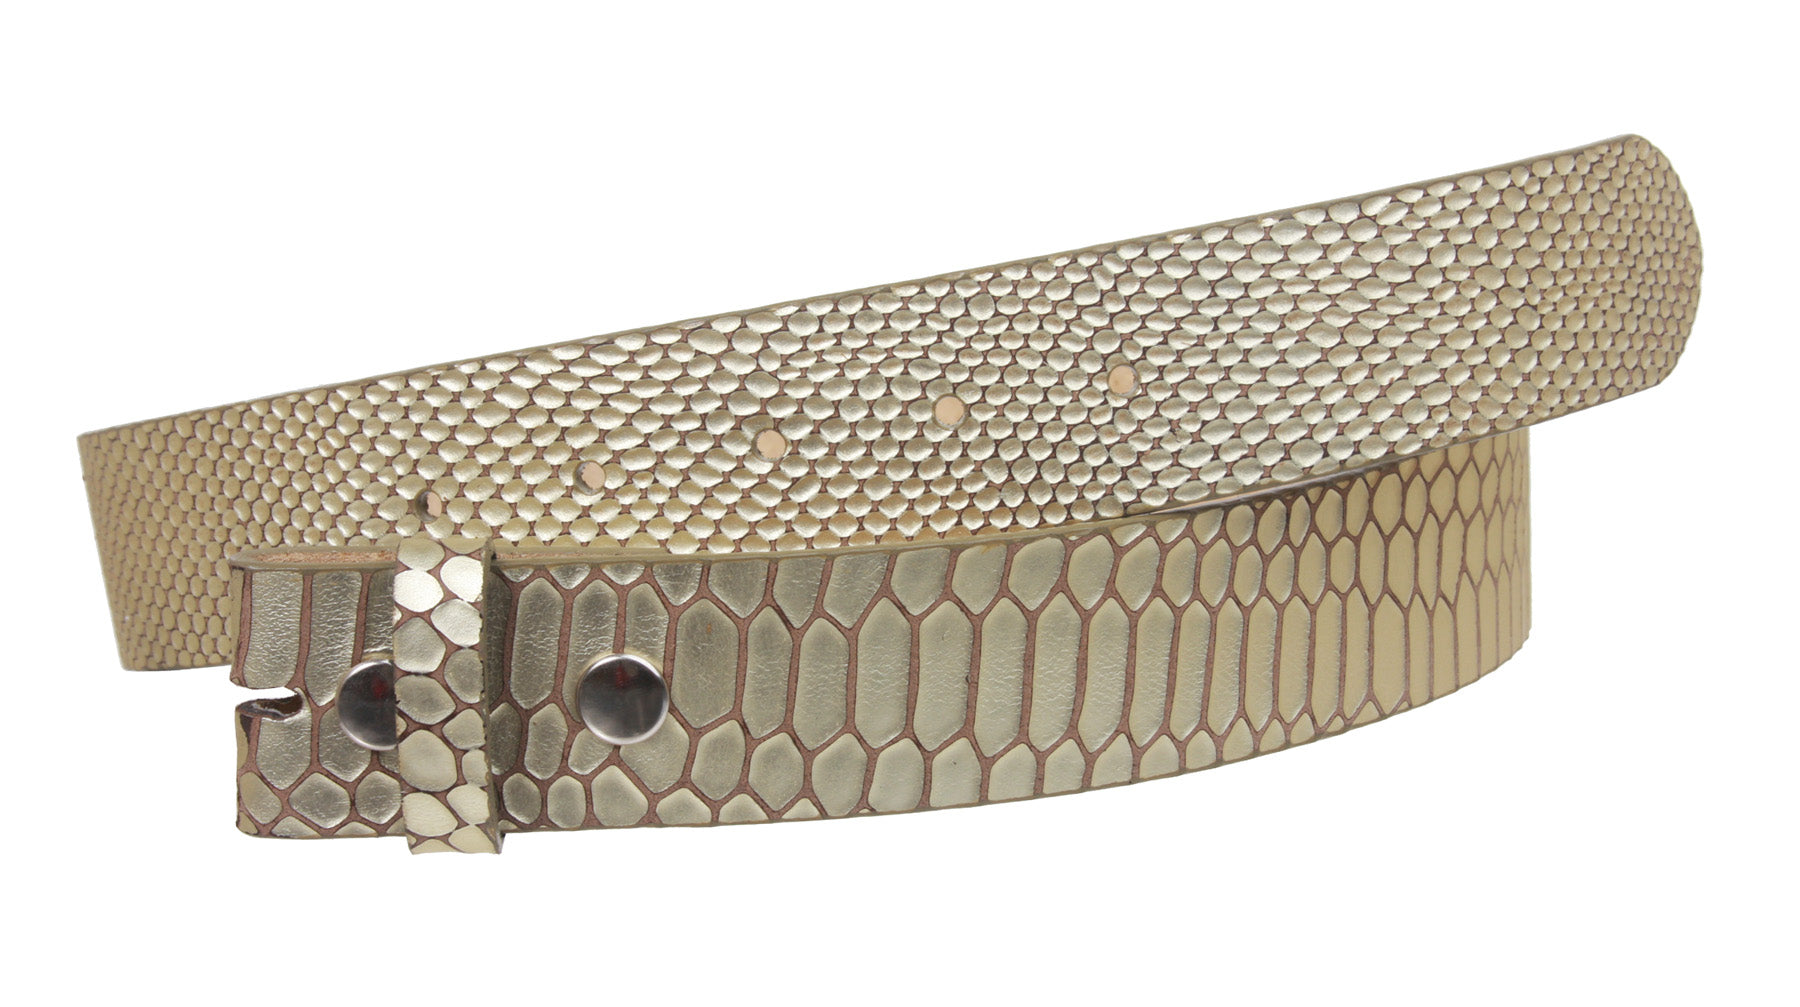 1 1/2" Snap On Snake Print Genuine Leather Belt Strap